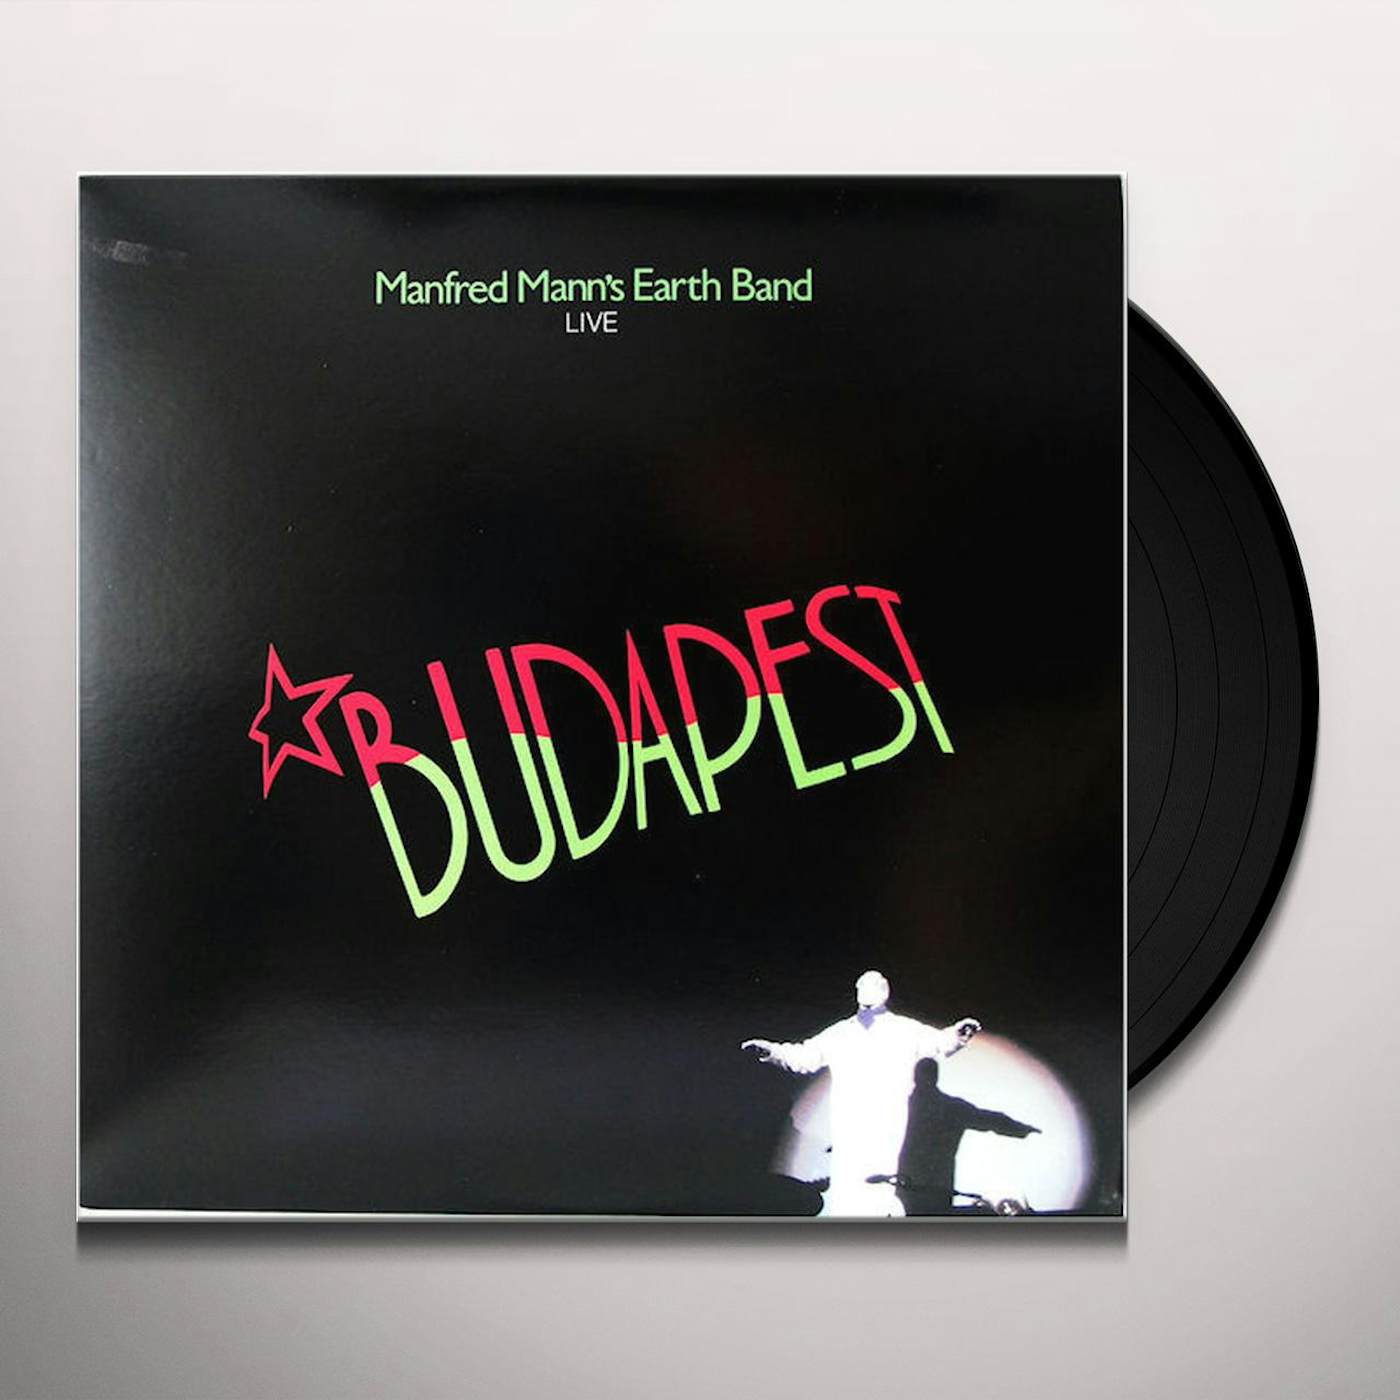 Manfred Mann's Earth Band BUDAPEST LIVE Vinyl Record